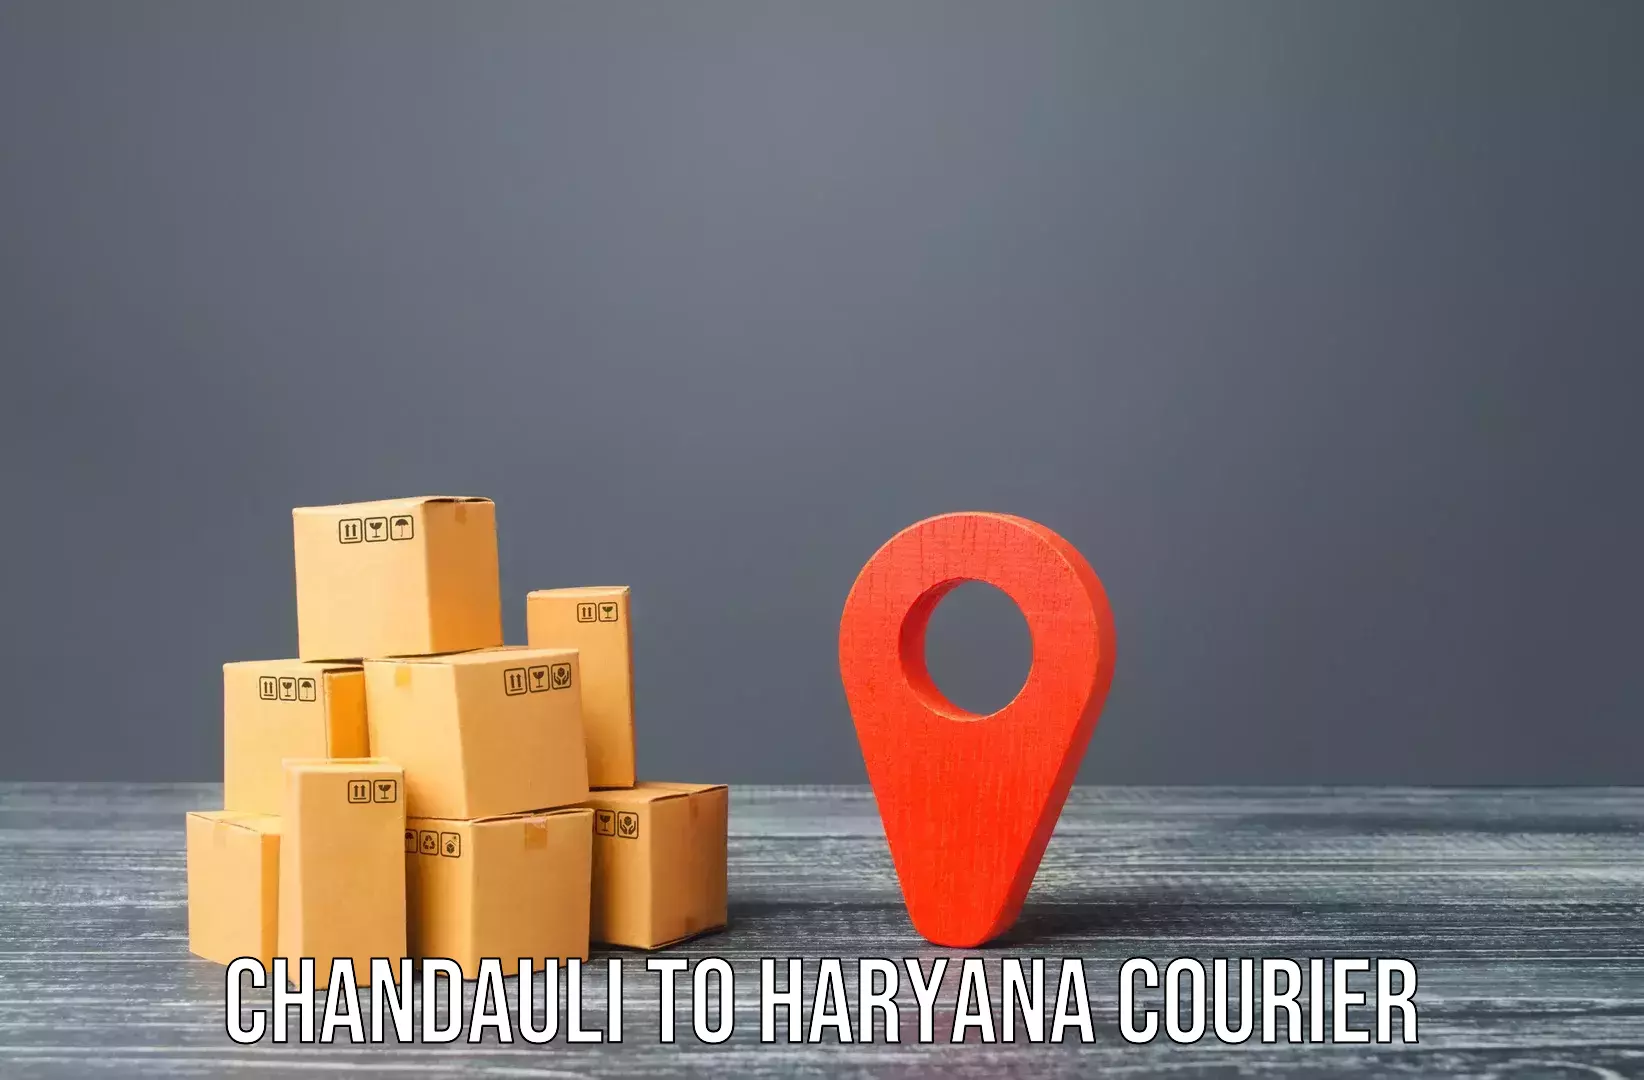 Professional furniture movers Chandauli to Gurgaon